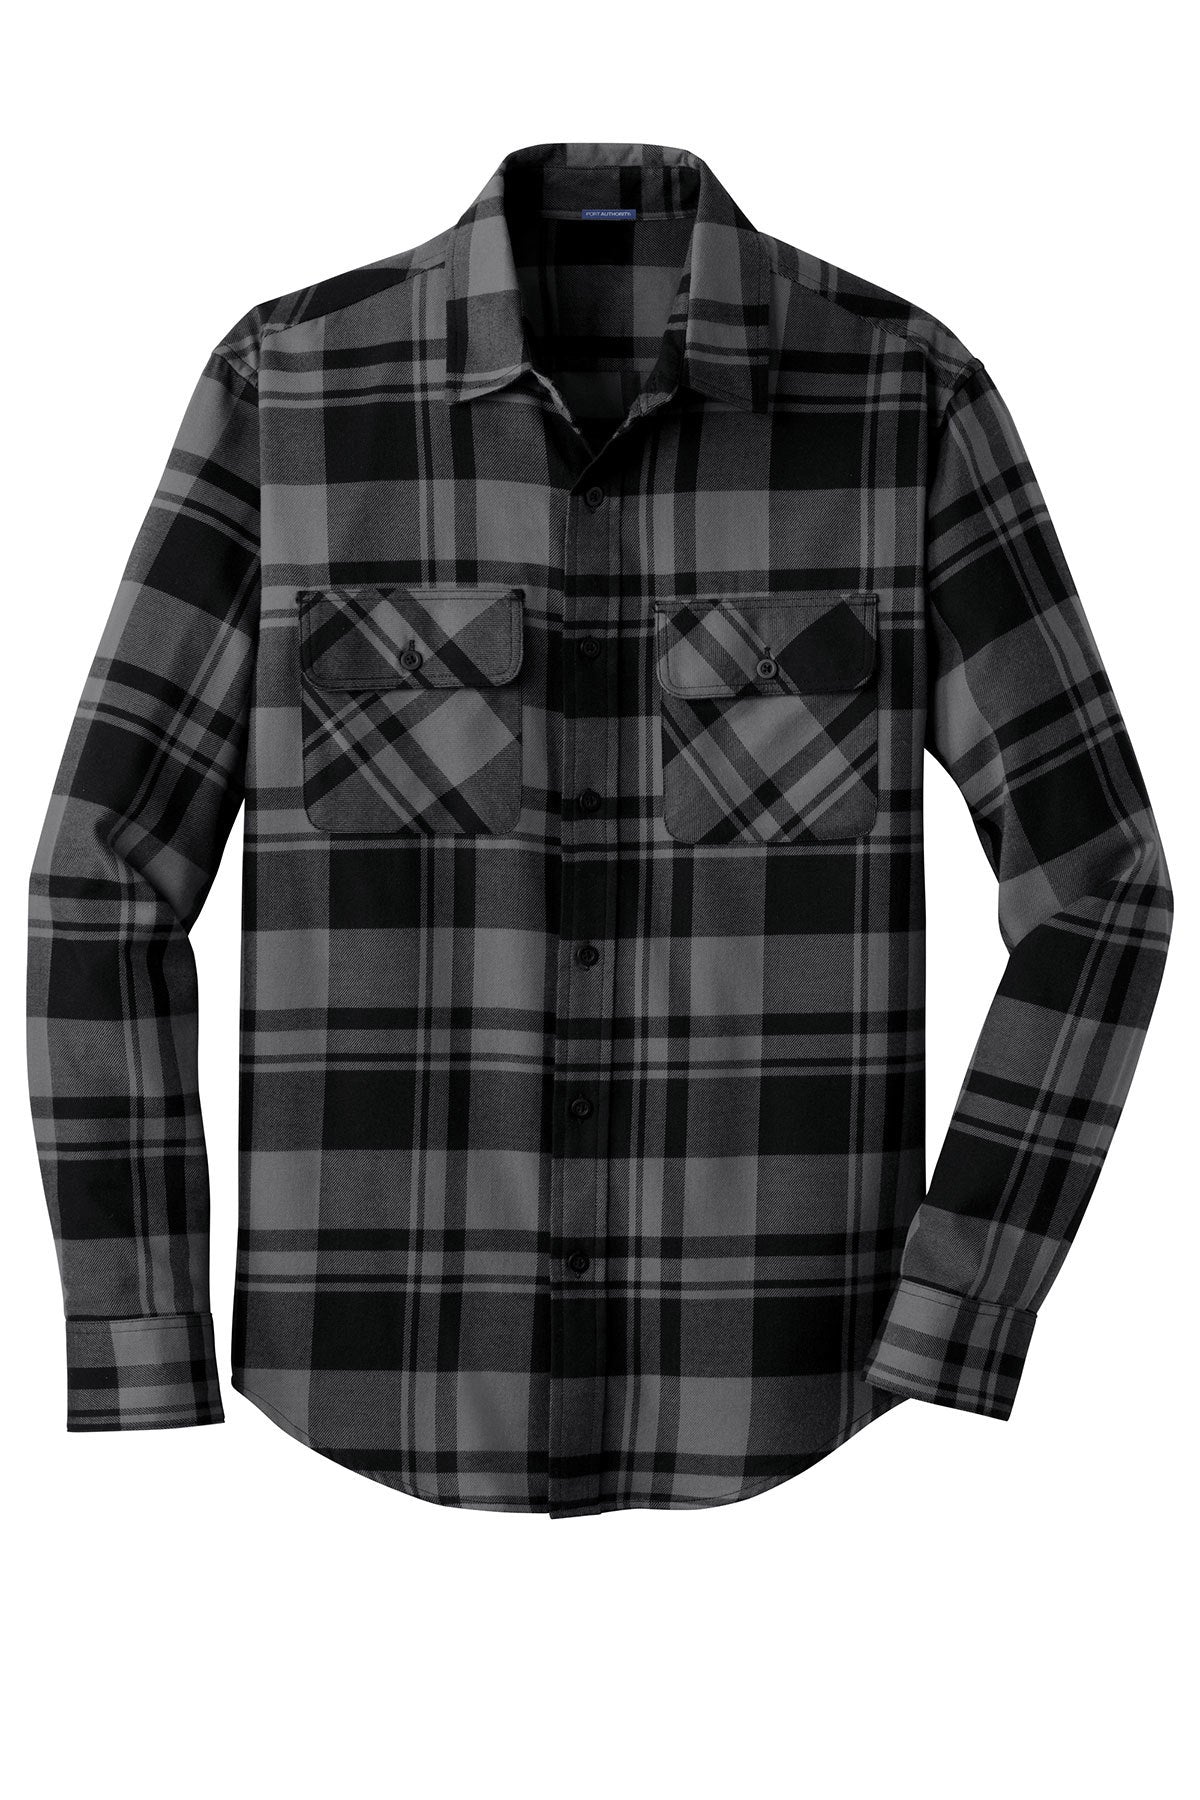 W668 Port Authority Plaid Flannel Shirt